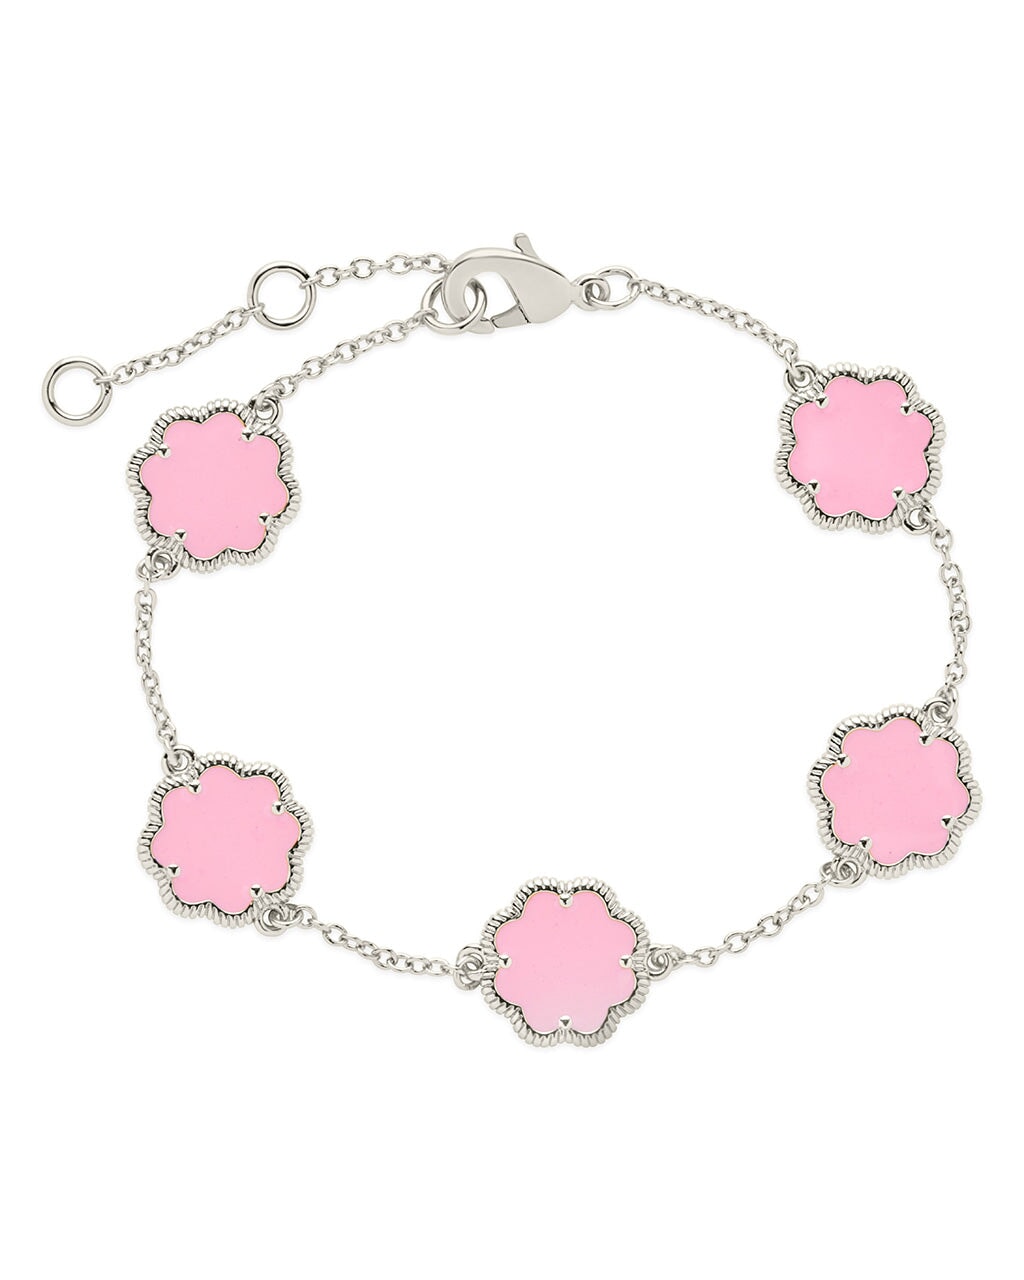 Color Blossom Bracelet, Pink Gold, White Gold, Pink Opal, White